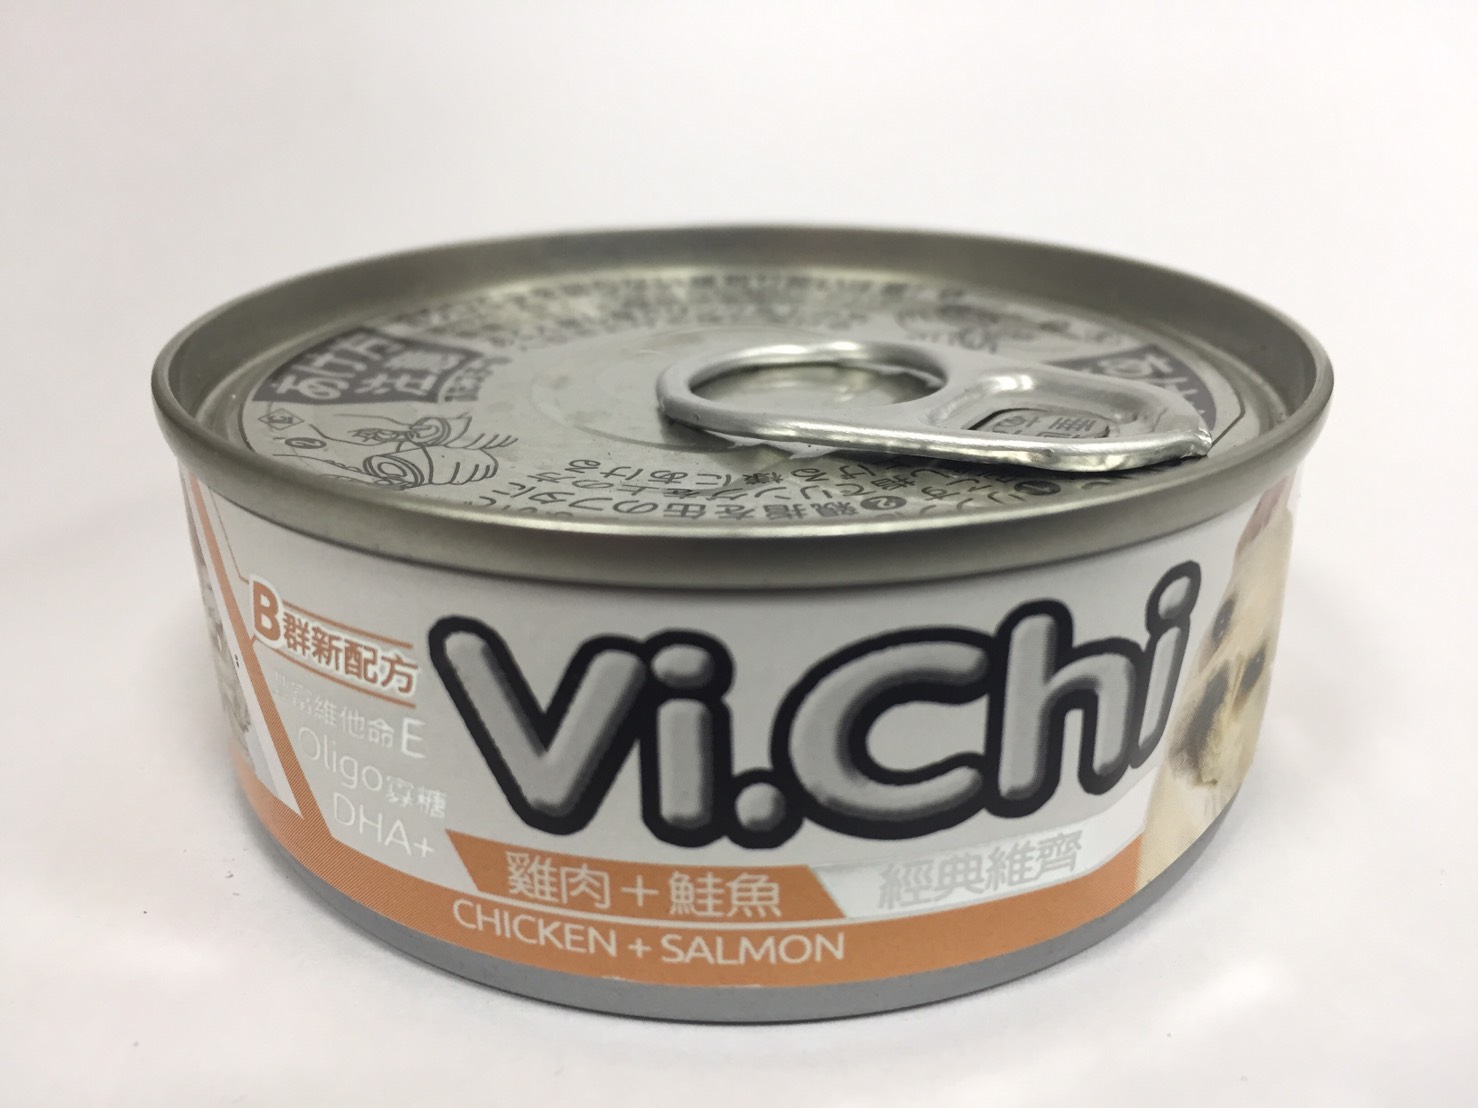 經典維齊 (雞肉+鮭魚)
Vi.Chi dog can (chicken+salmon)